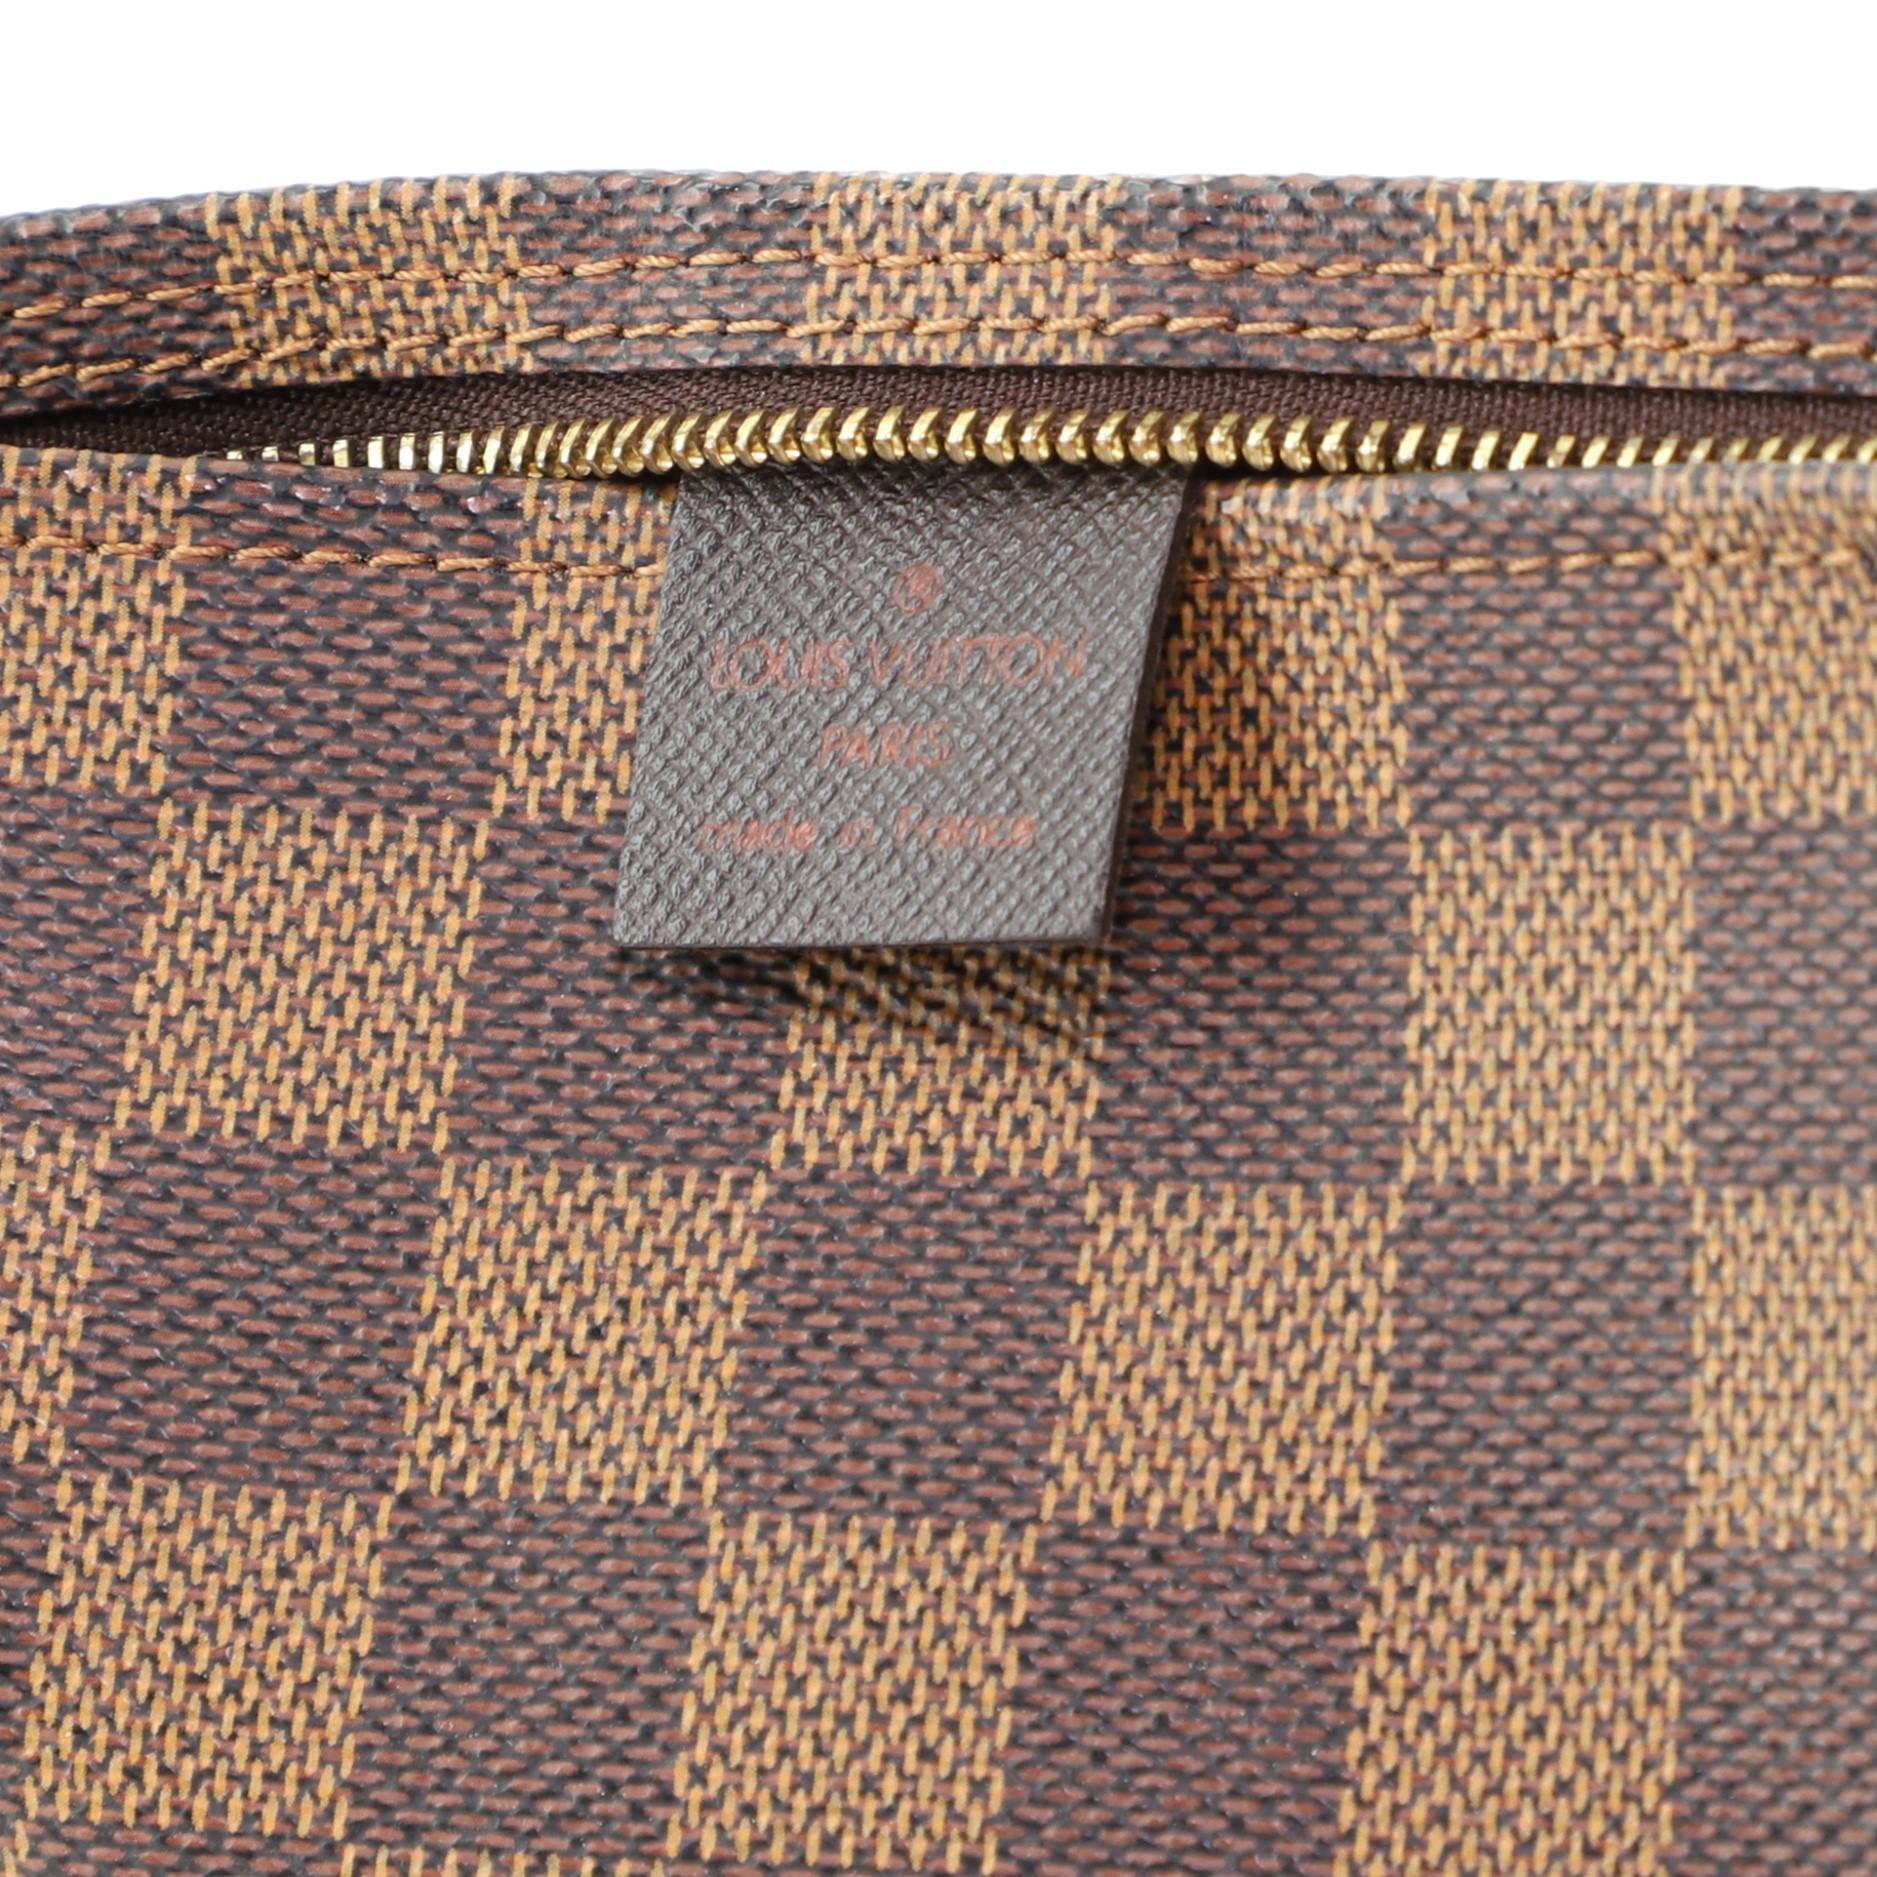 Women's or Men's Louis Vuitton Trousse Make Up Bag Damier